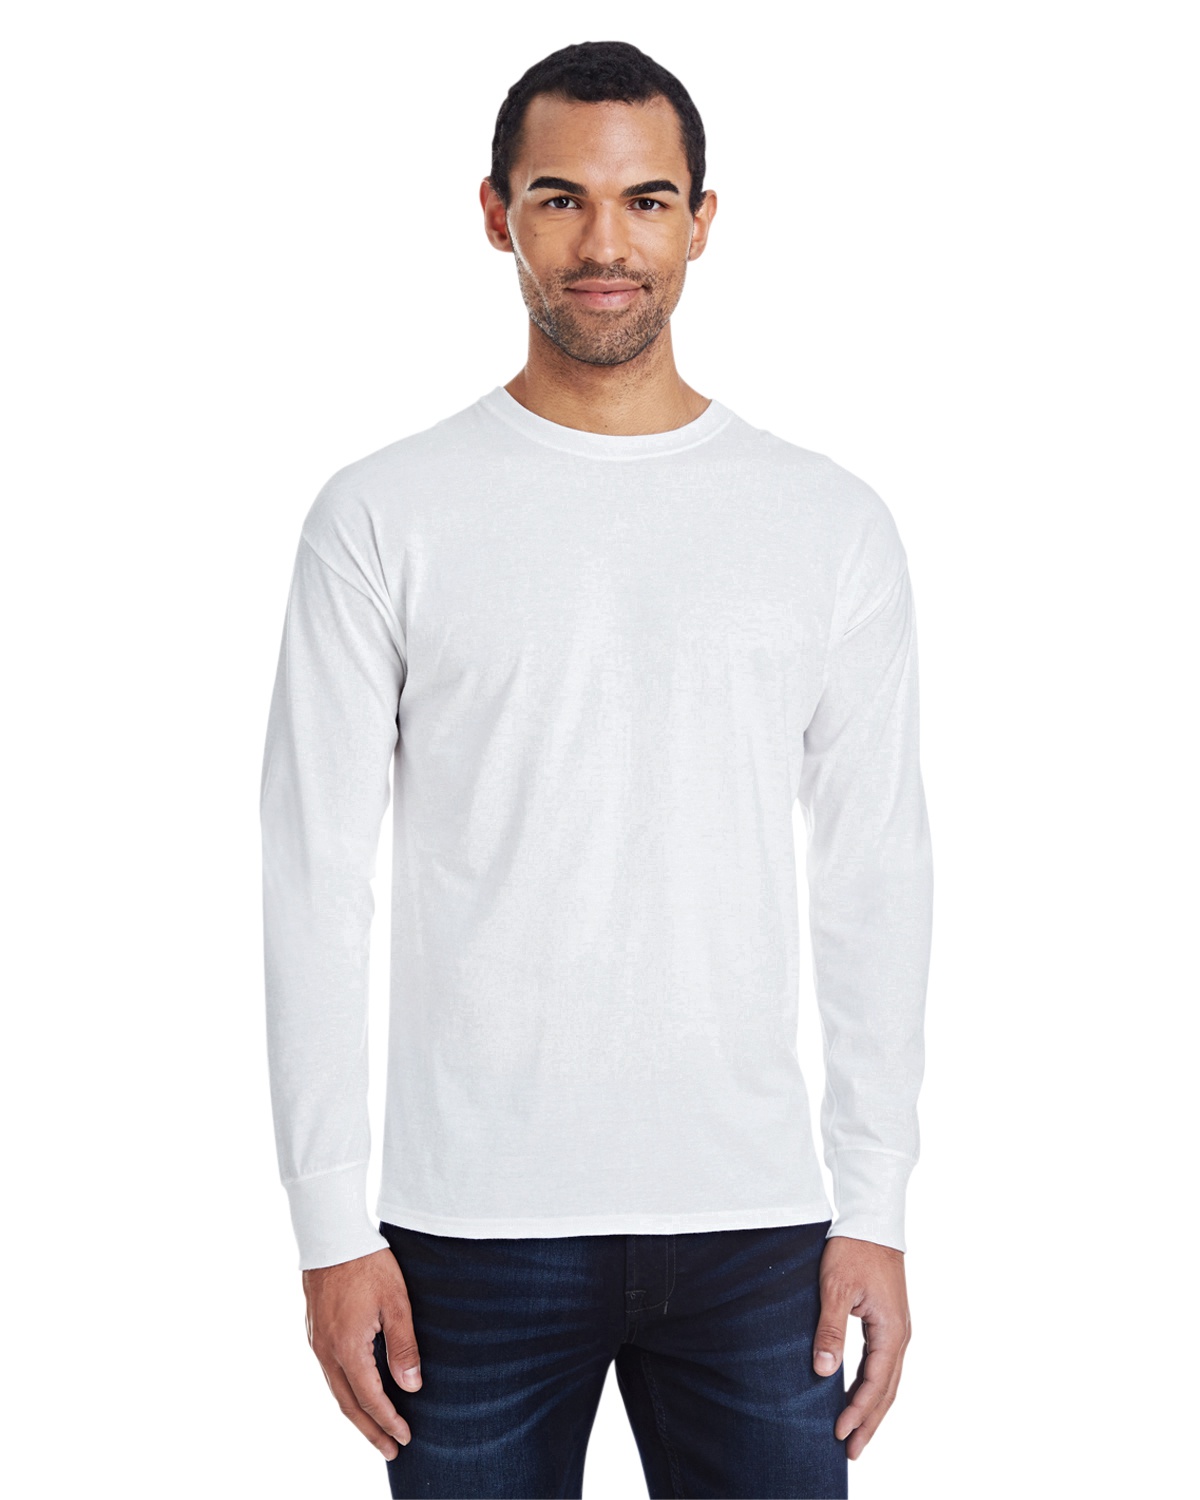 'Hanes 42L0 Men's X Temp Long Sleeve Ring Spun Cotton polyester T-Shirt'